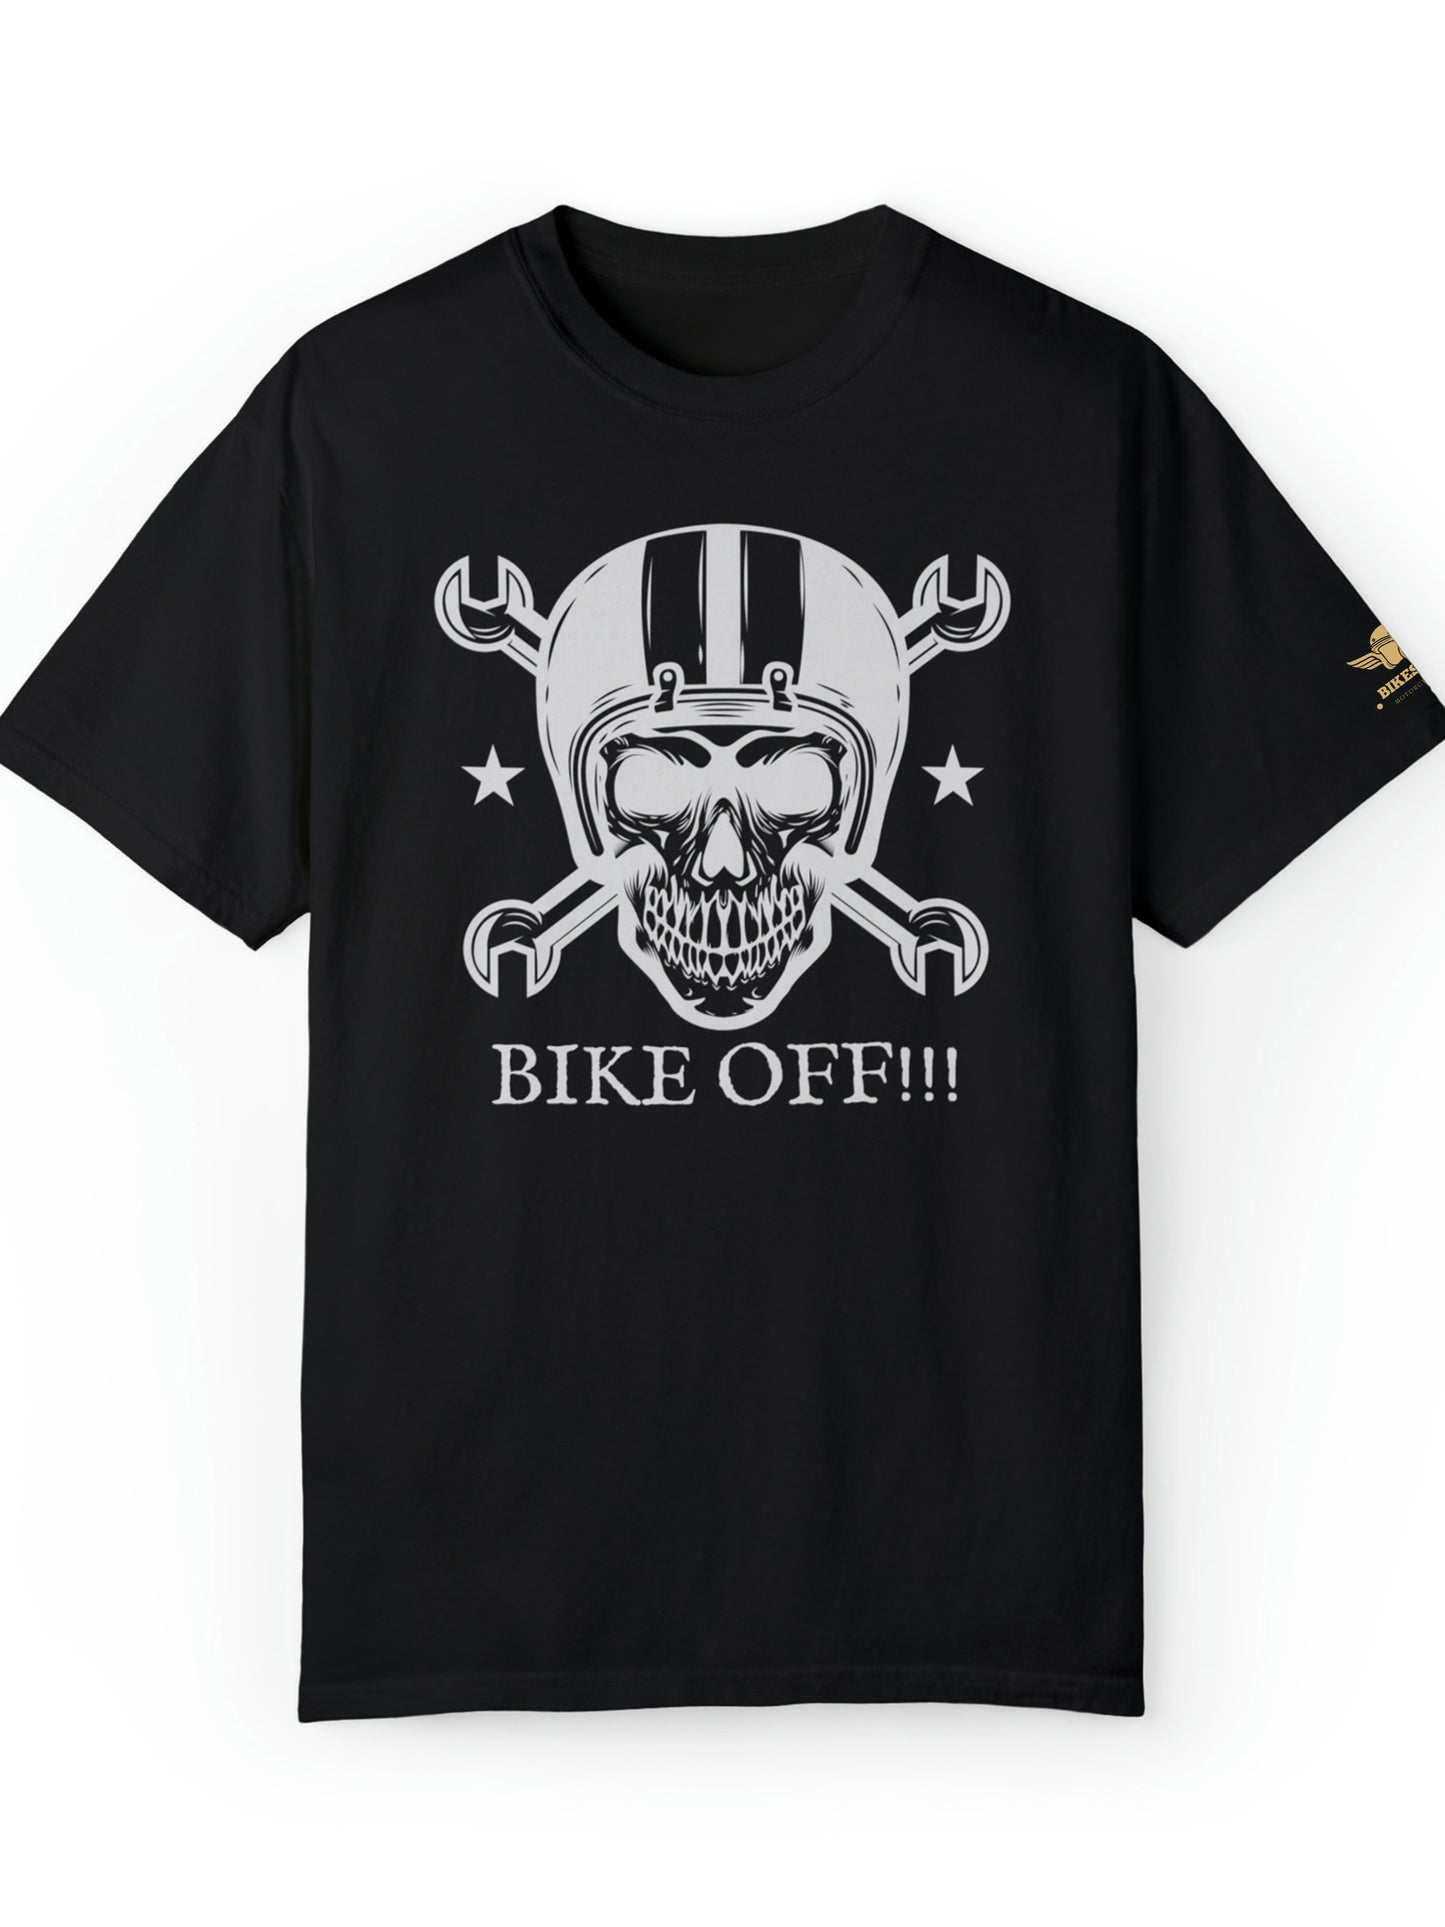 T-shirt motorcycle short sleeve black - Bike off!!!